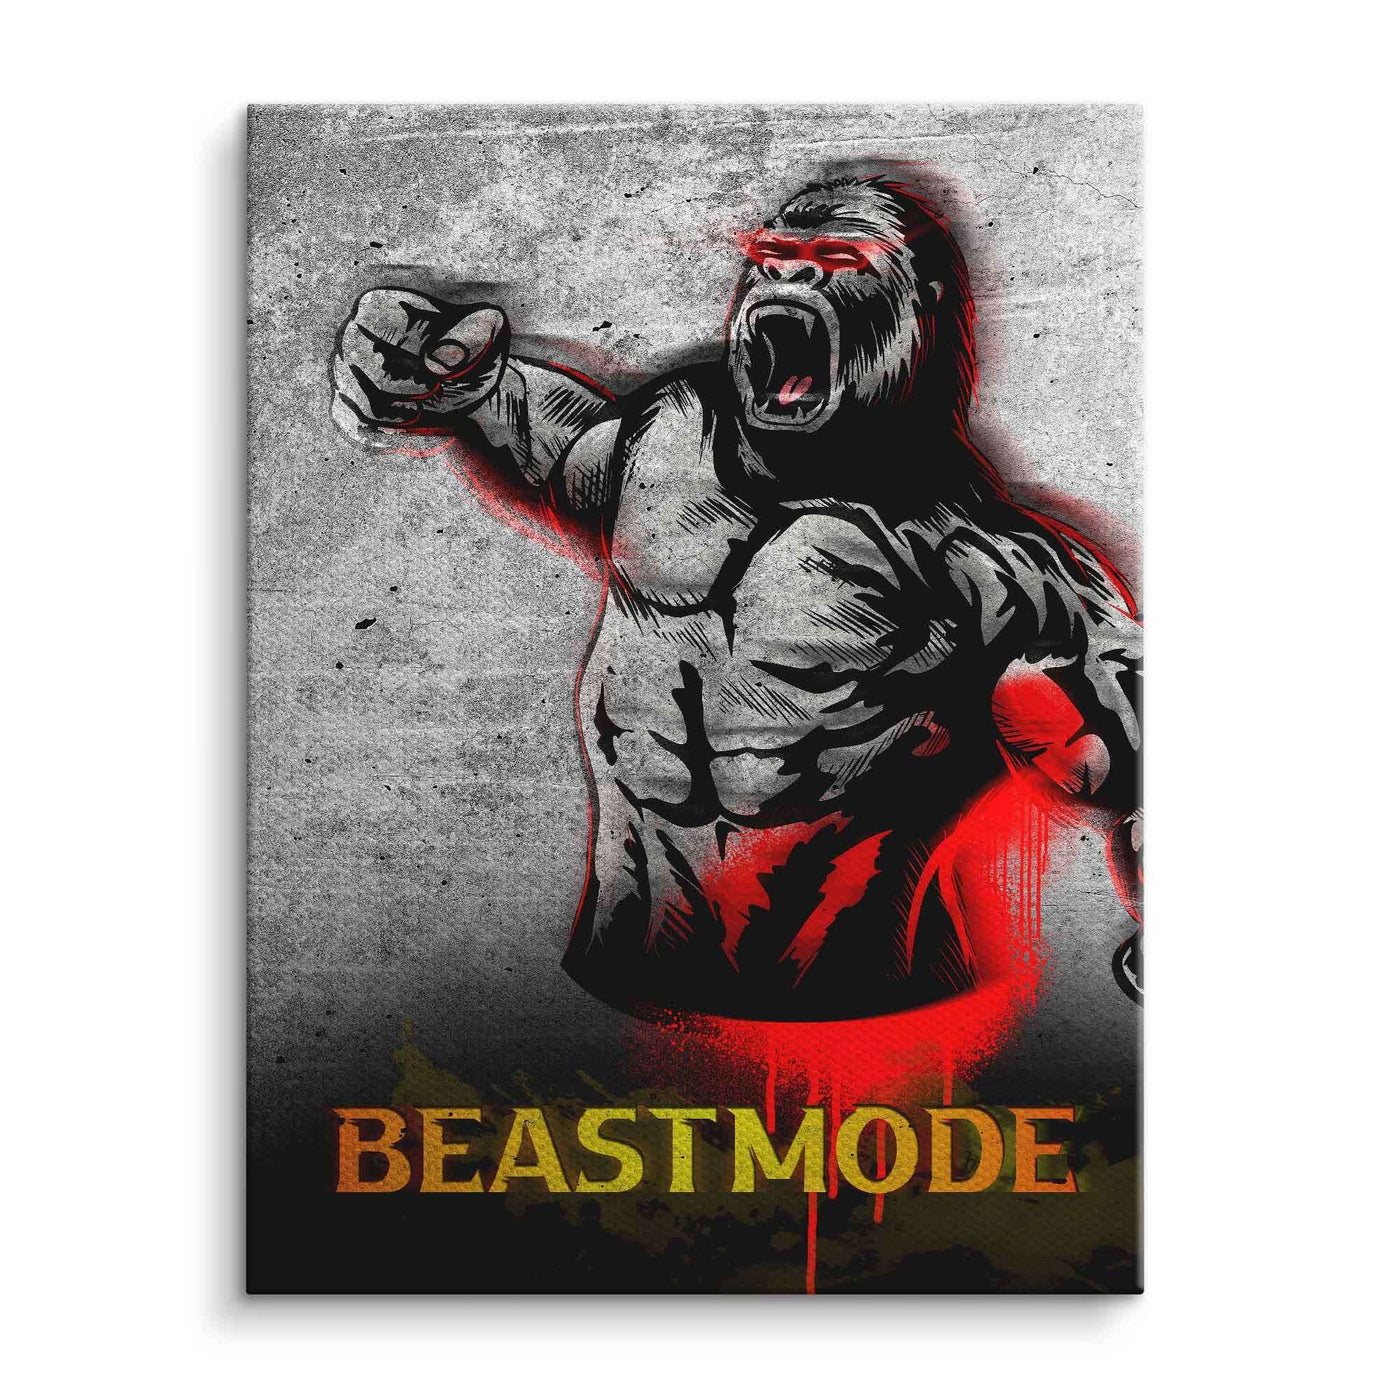 Beastmode